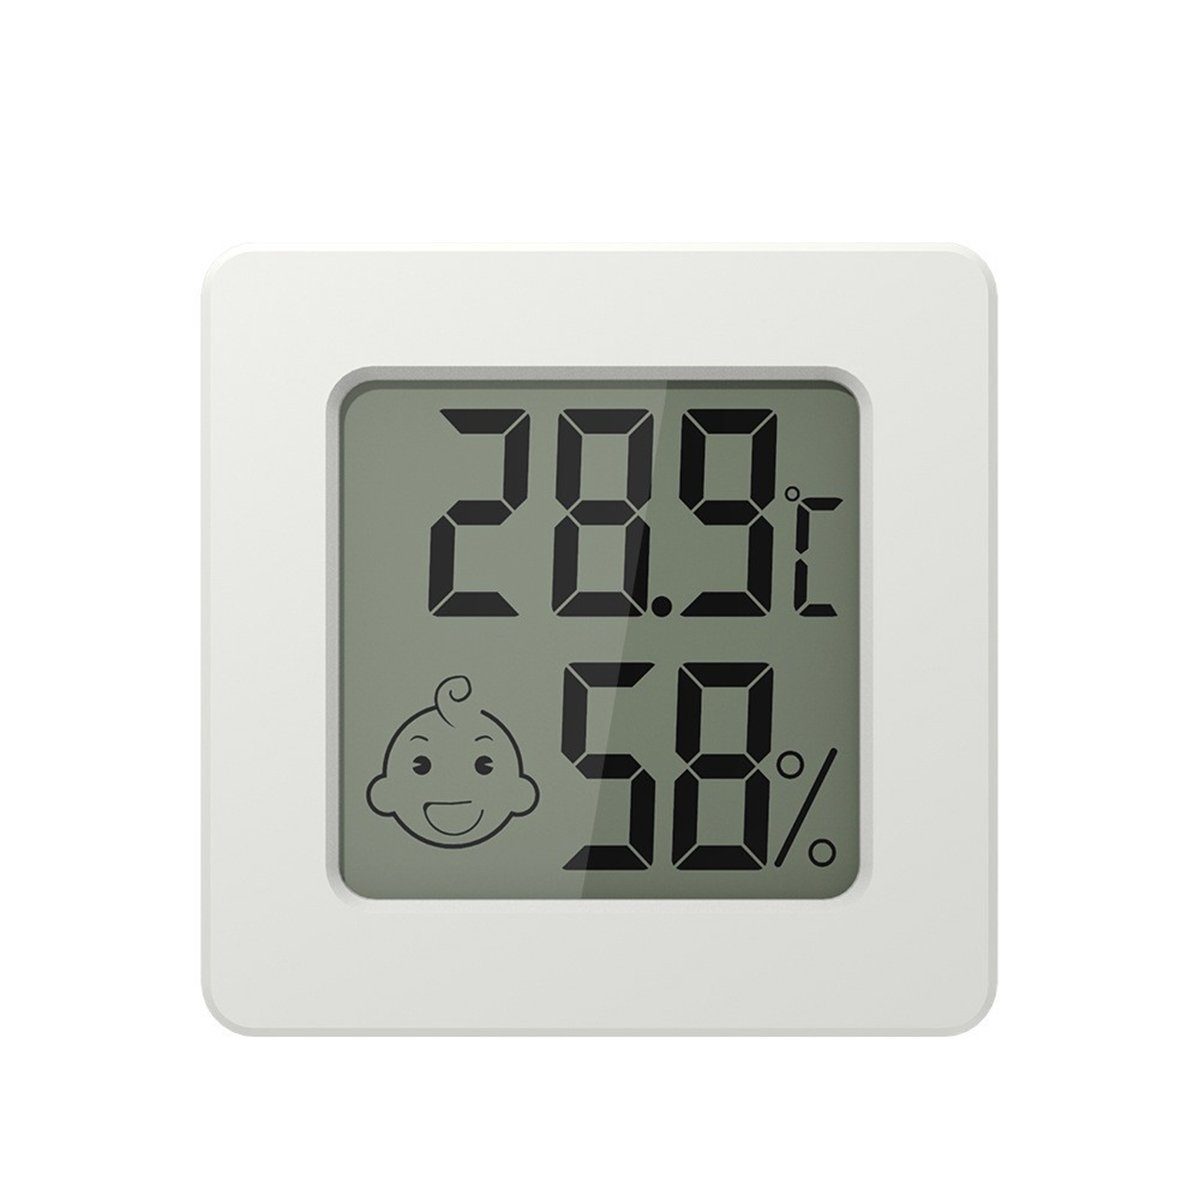 autolock Raumthermometer Mini Thermometer Hygrometer Raumthermometer, Digital Innen Temperatur Monitor für Innenraum Babyraum